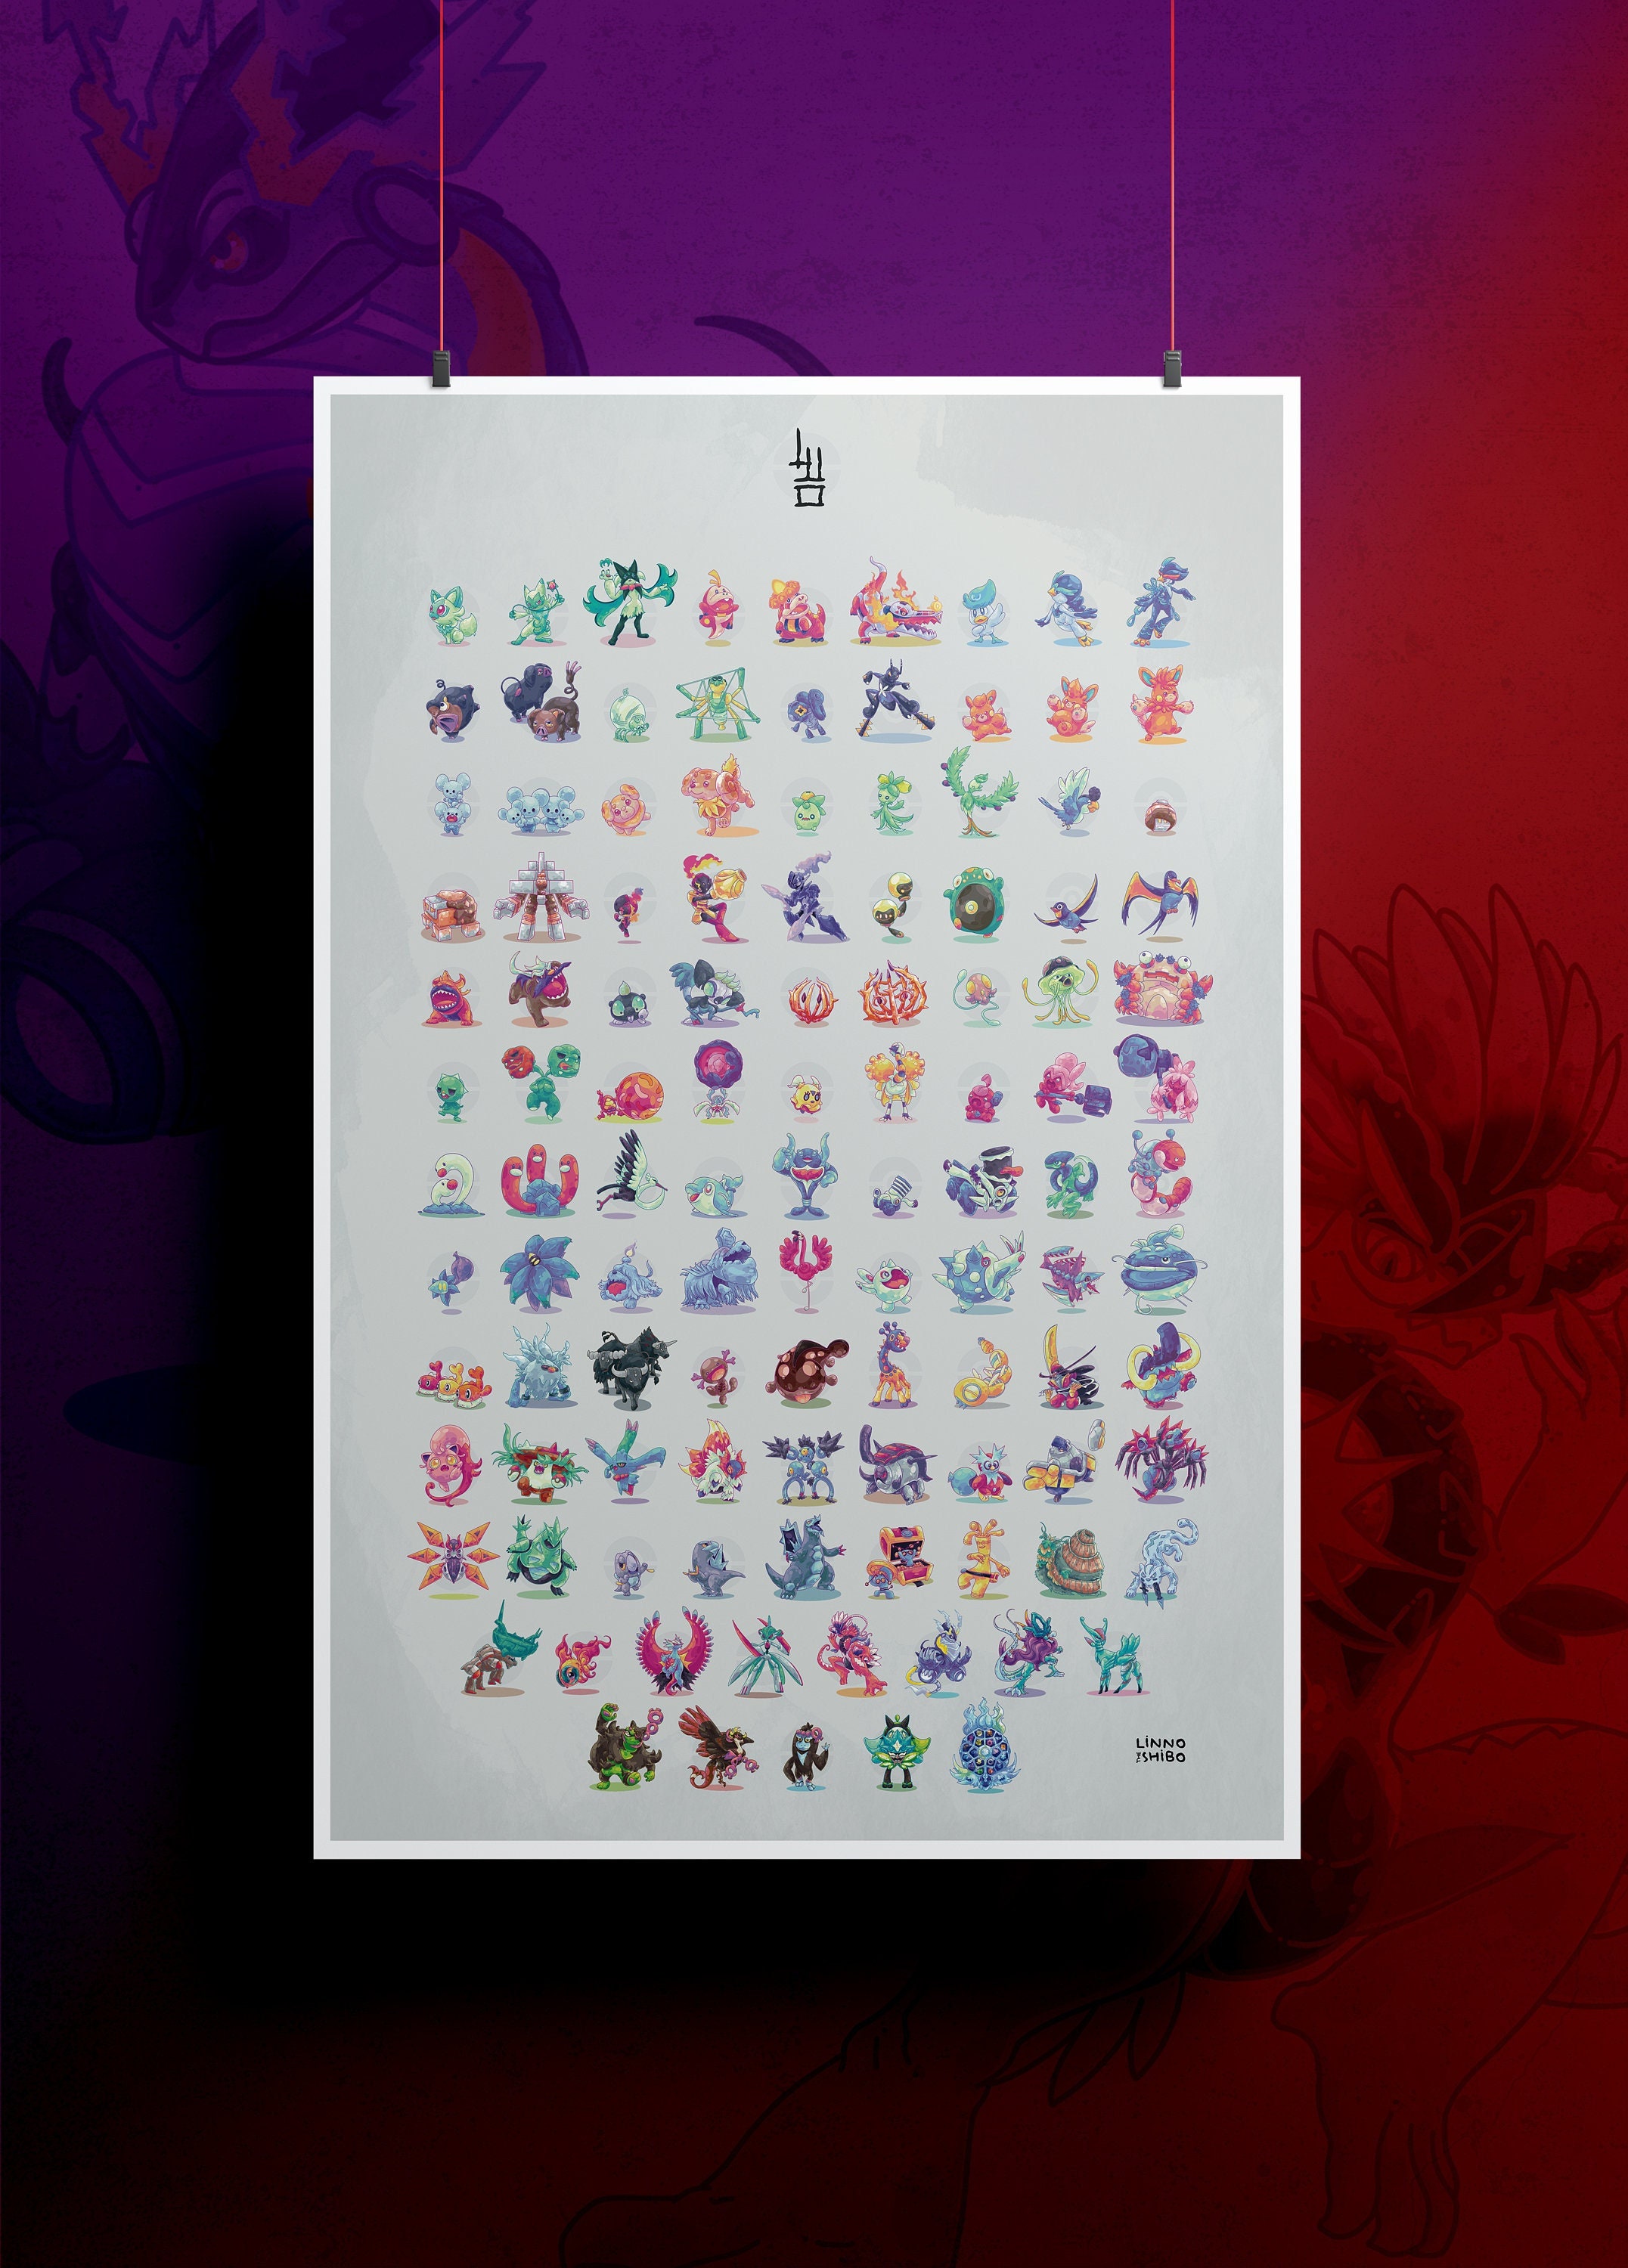 Pokemon Full Pokedex 1-816 Gen 1 To Gen 8 Poster Art Print - A3 Size